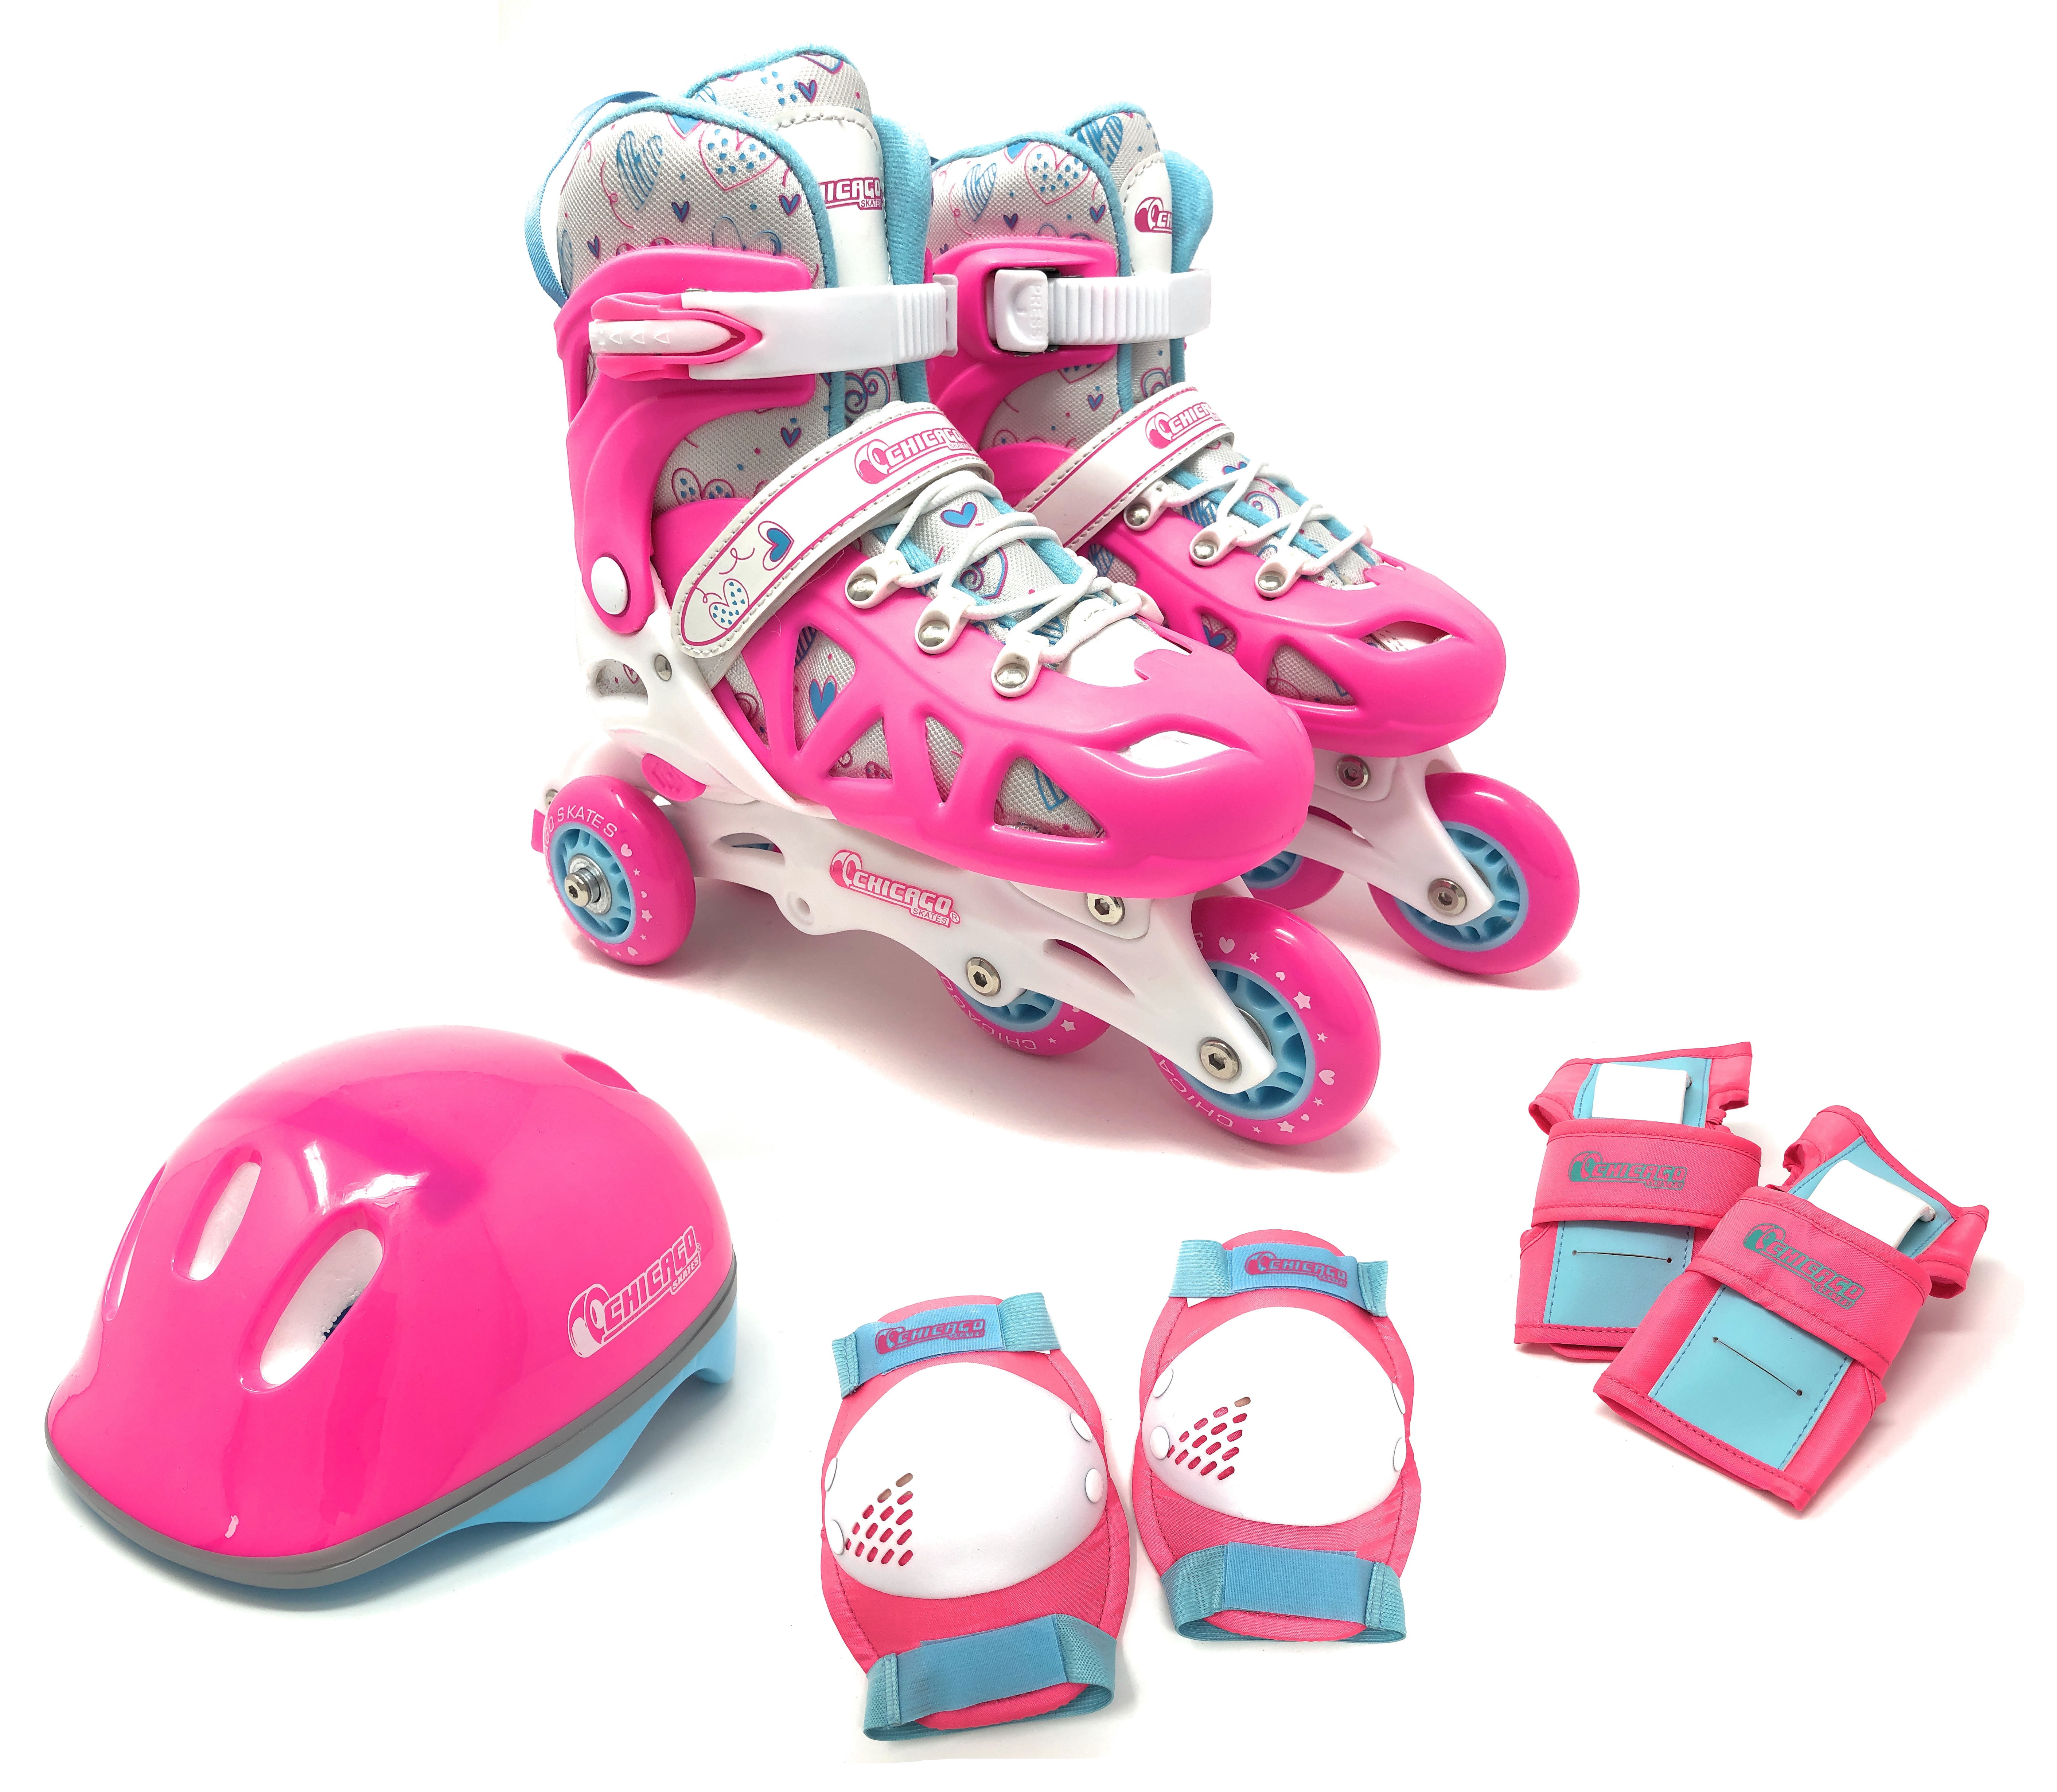 Chicago Adjustable Inline Training Skate Combo Set Pink/White/Teal, Includes Skates, Helmet, Knee Wrist guards and Carryall backpack, Size Small (J10-J13) - Walmart.com